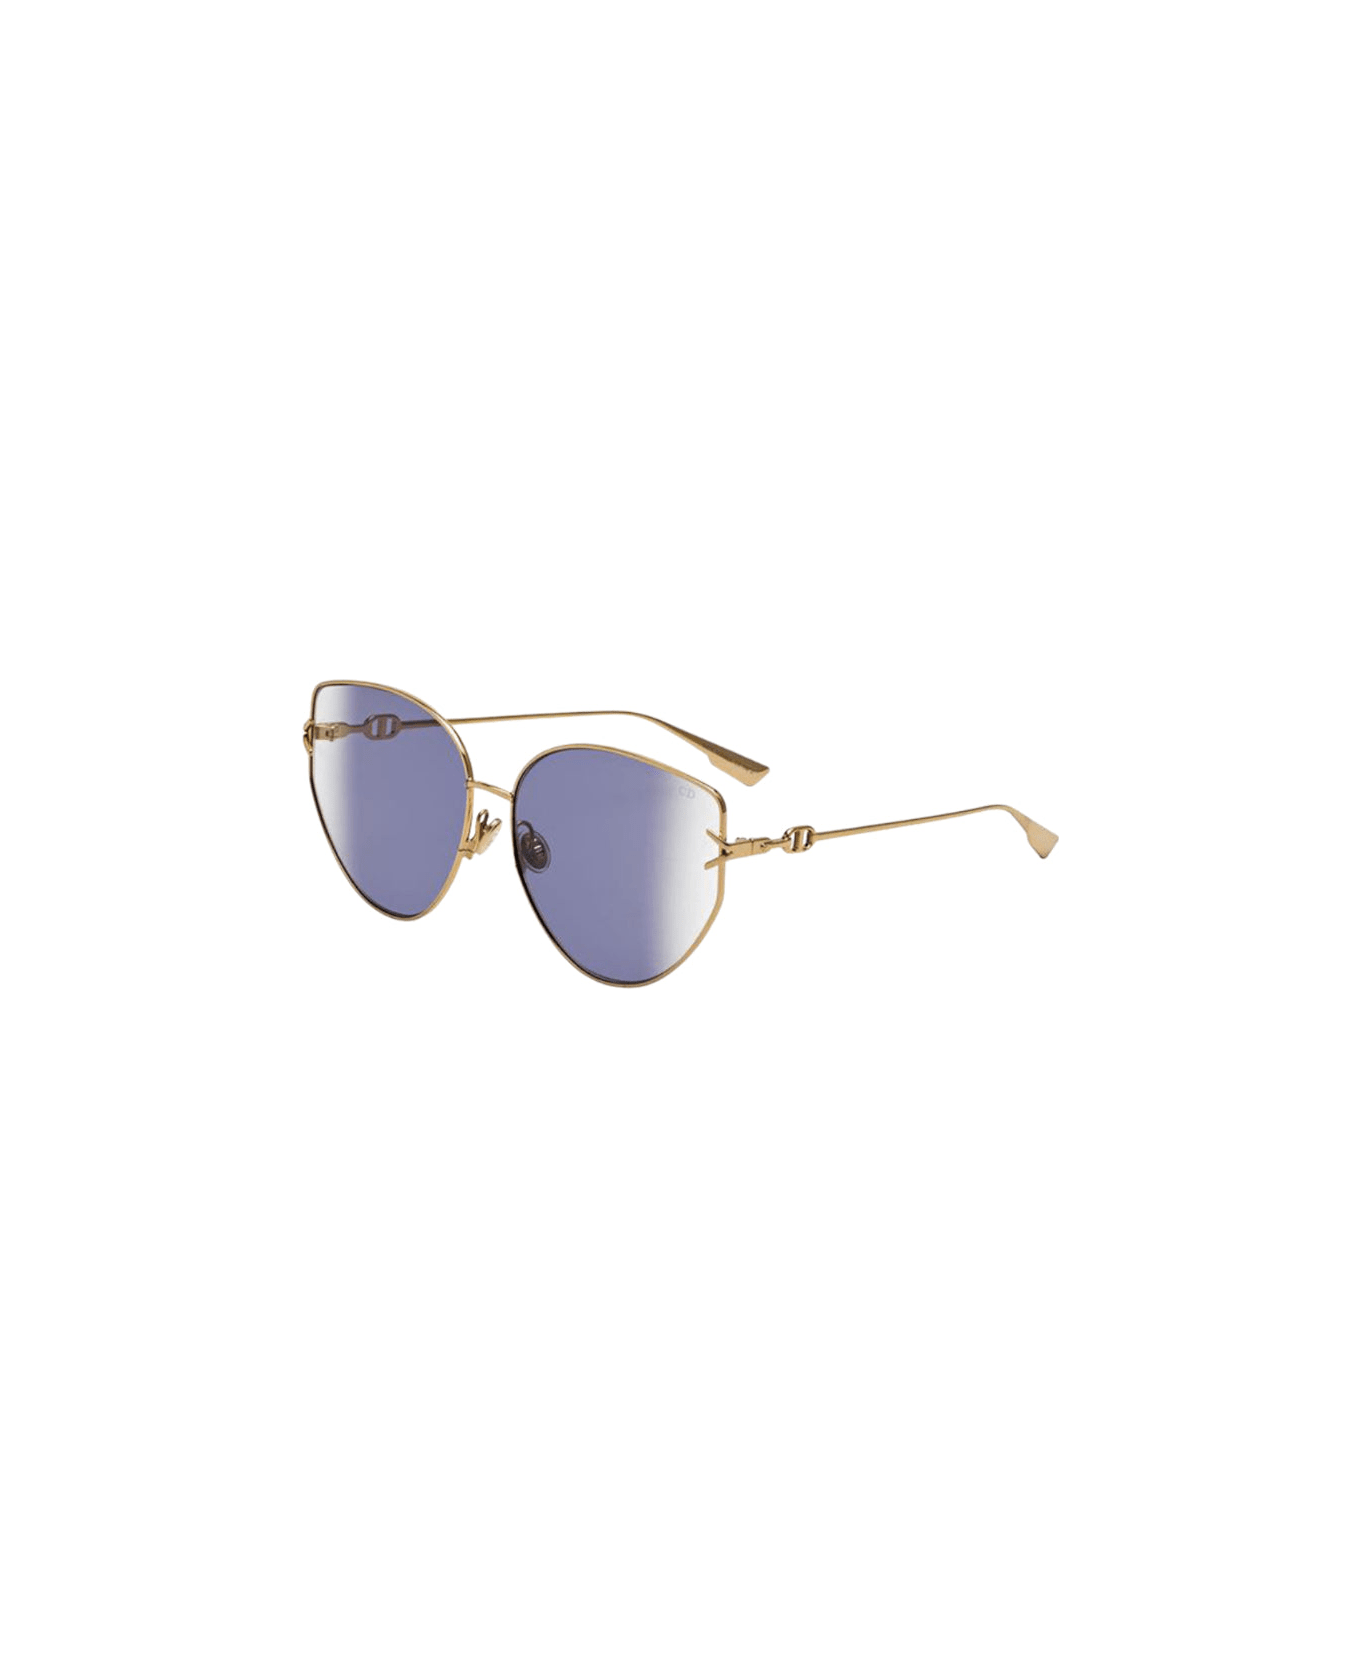 Dior Eyewear Gipsy 1 - Rose Gold Sunglasses